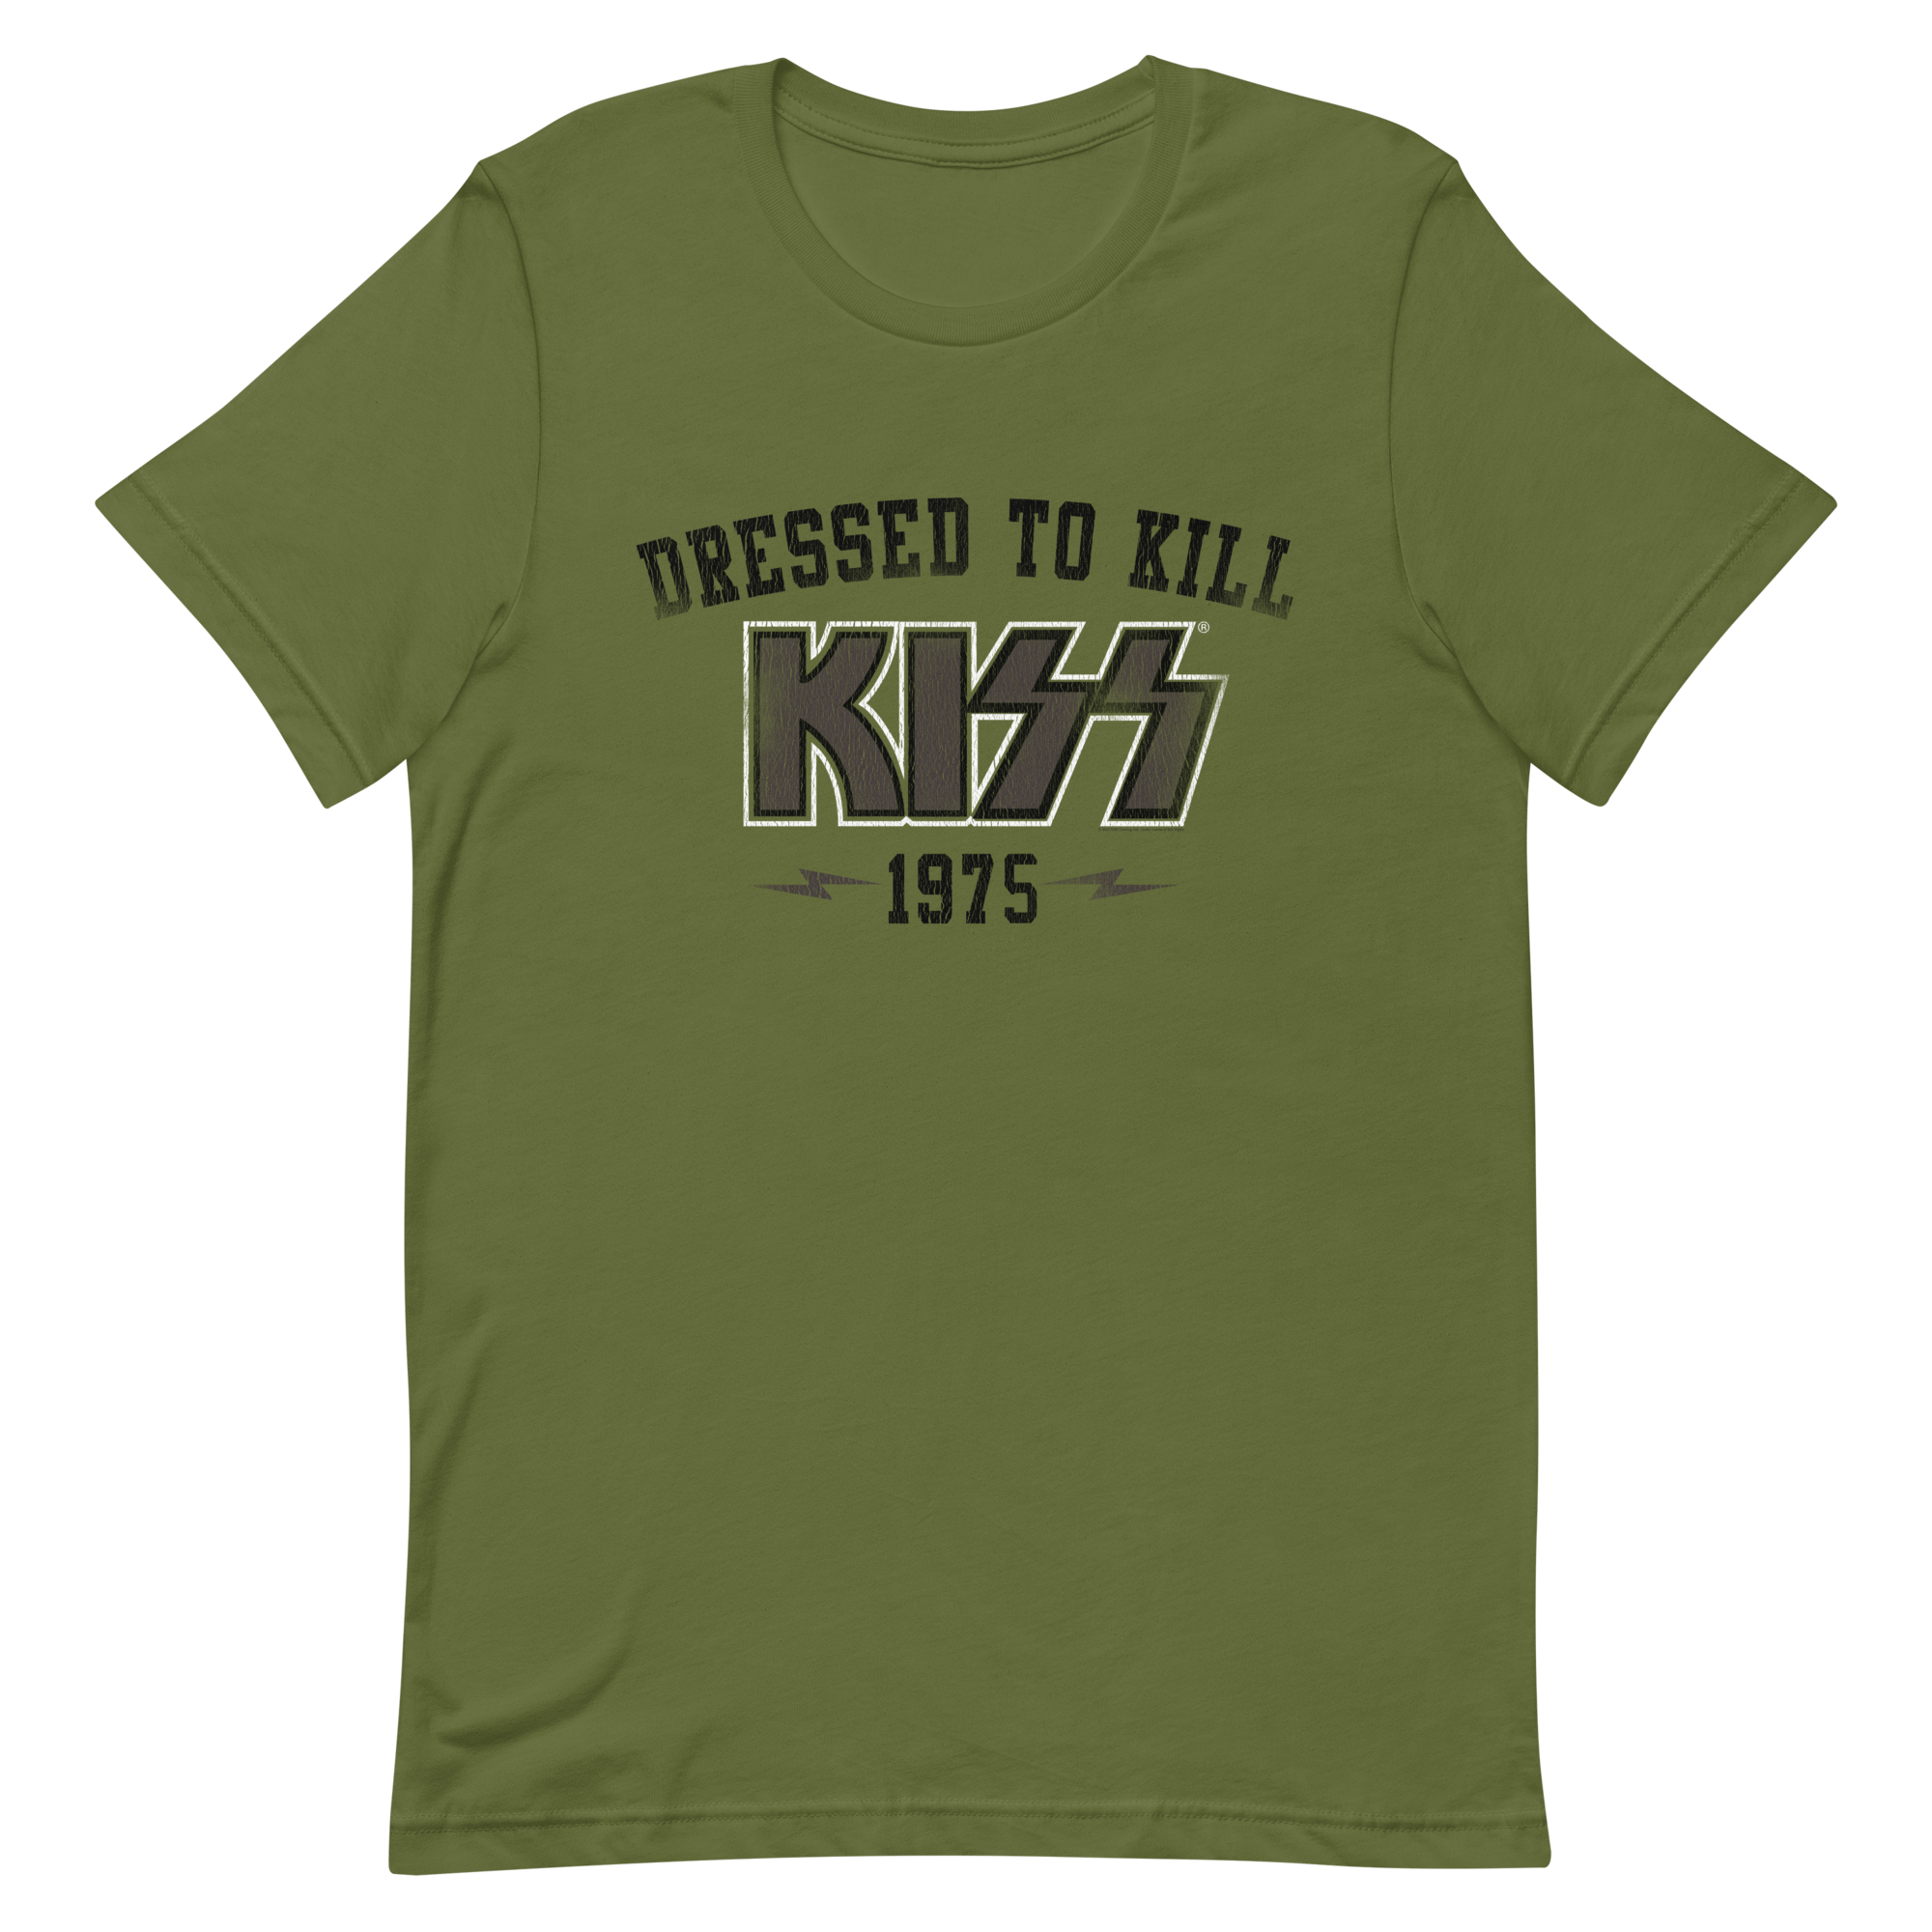 Kiss - Dressed To Kill '75 Tee Military Green